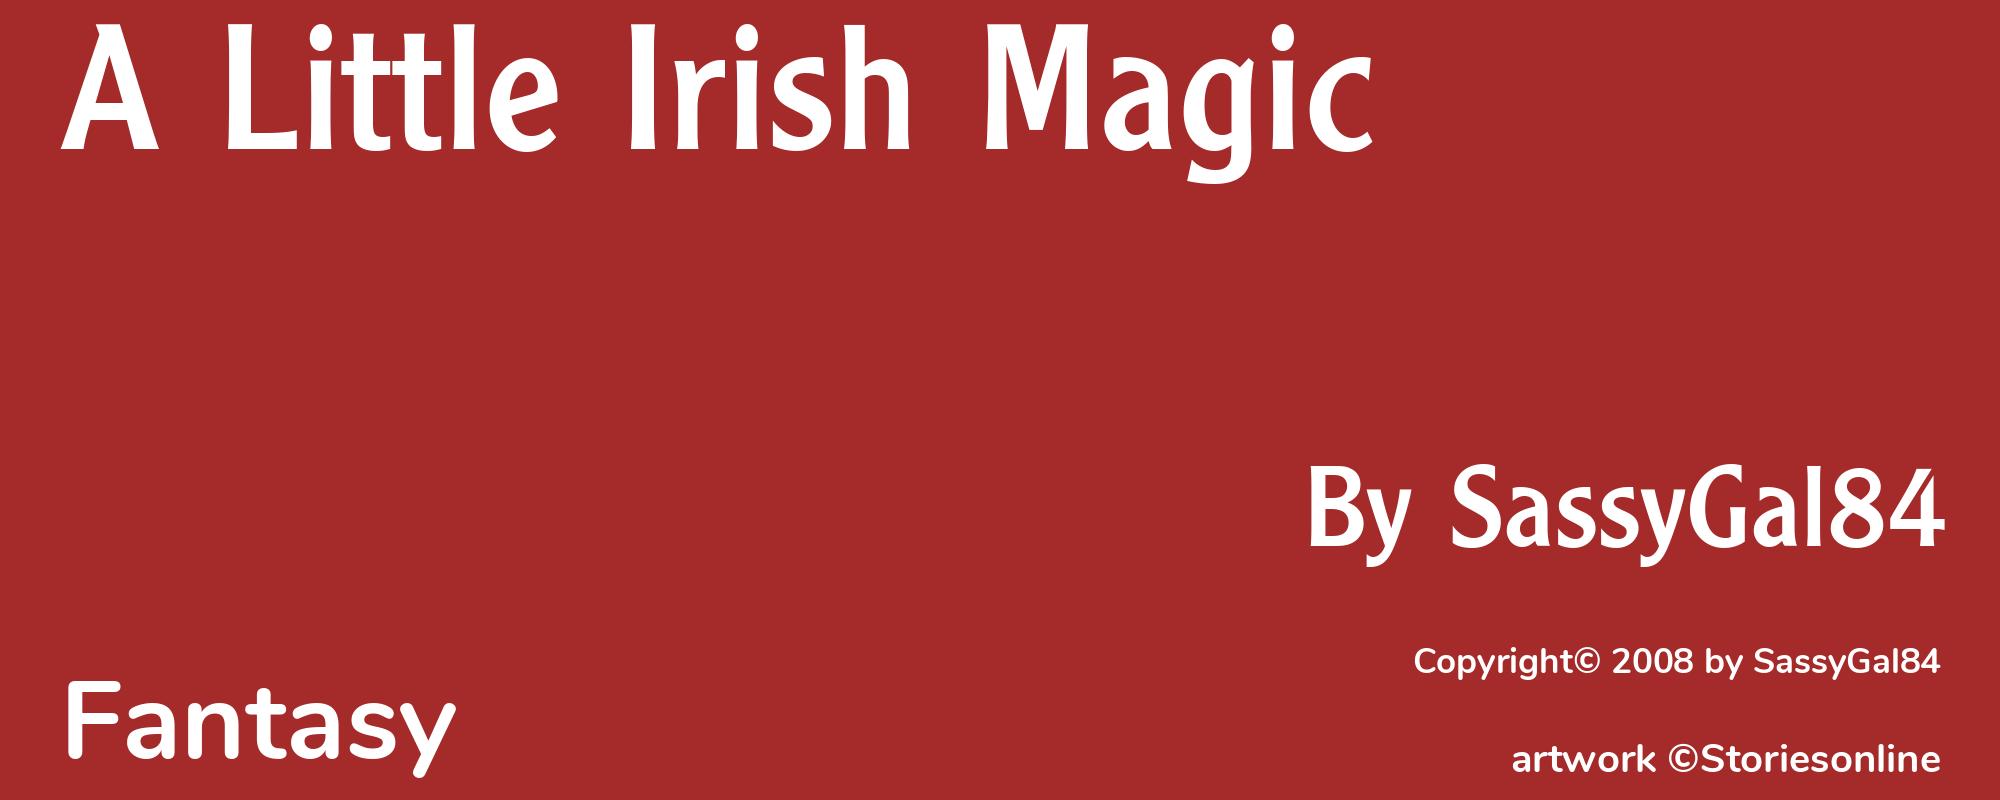 A Little Irish Magic - Cover